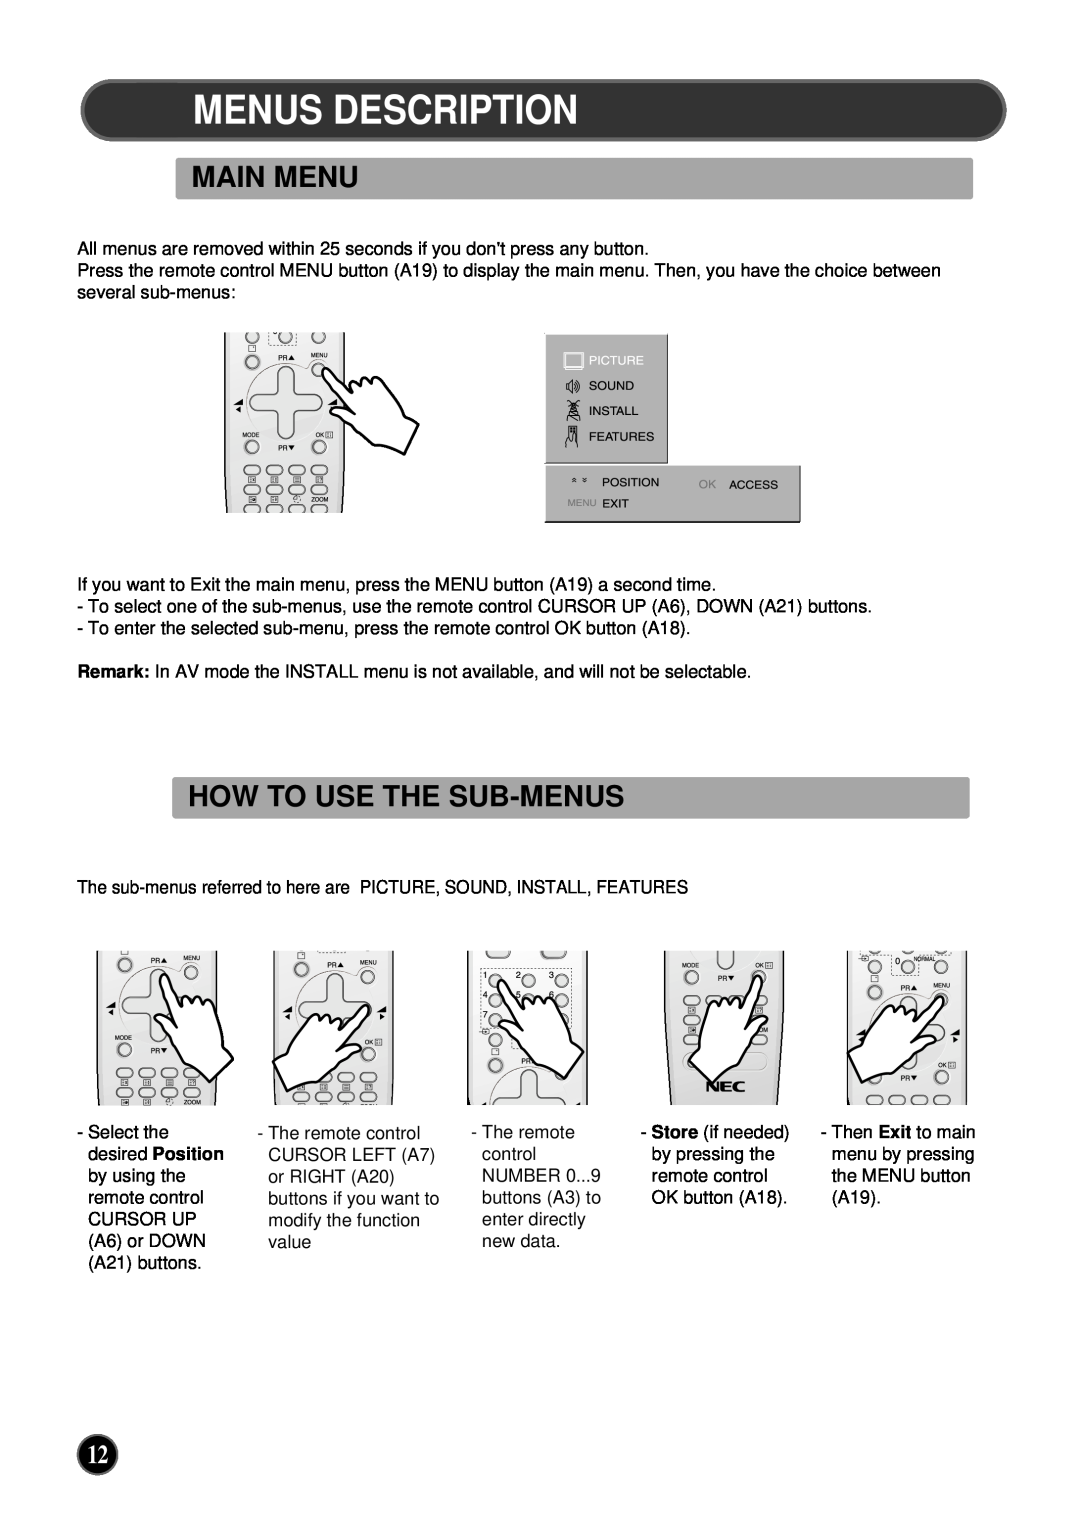 NEC PF32WT100 instruction manual Features, Menus Description, Main Menu, How To Use The Sub-Menus, Installsoundpicture 